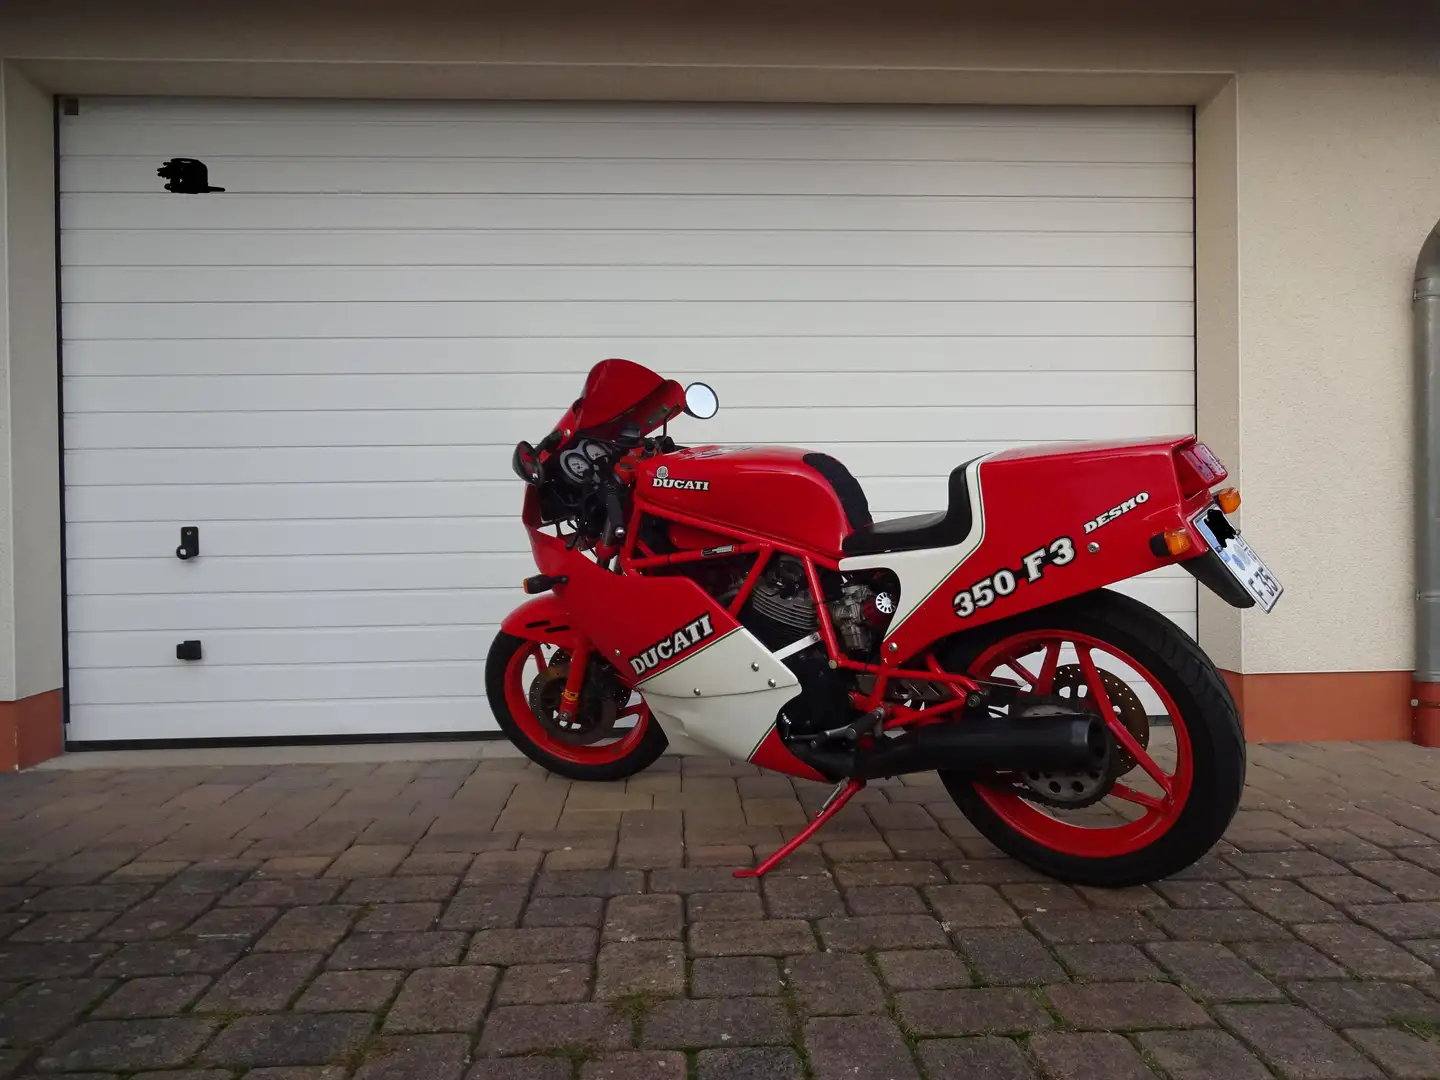 Ducati 750 F1 - 2